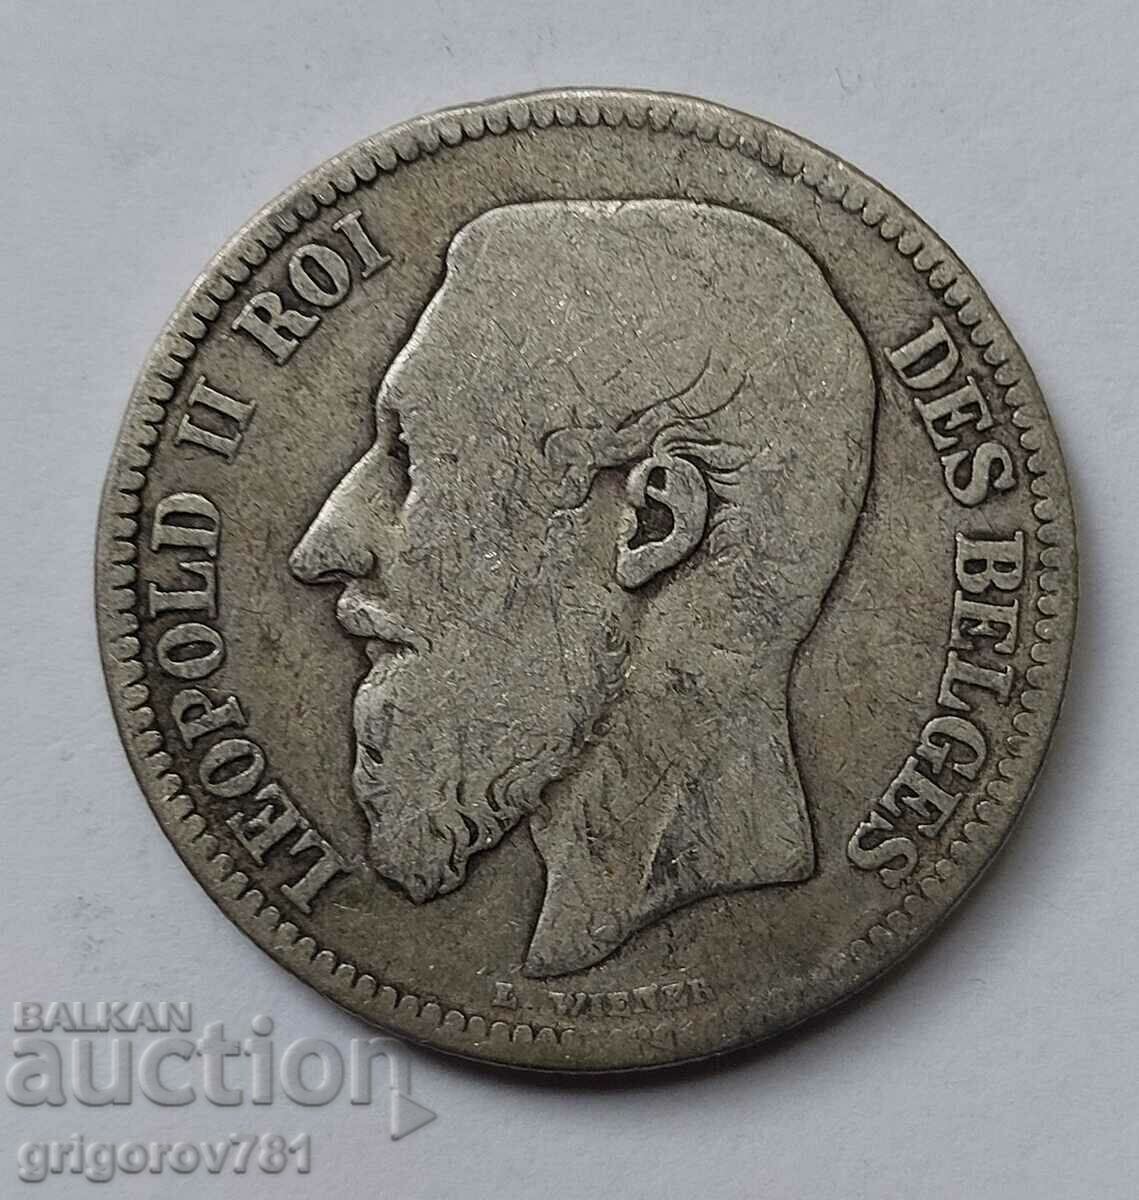 2 Franci Argint Belgia 1867 - Moneda de argint #164